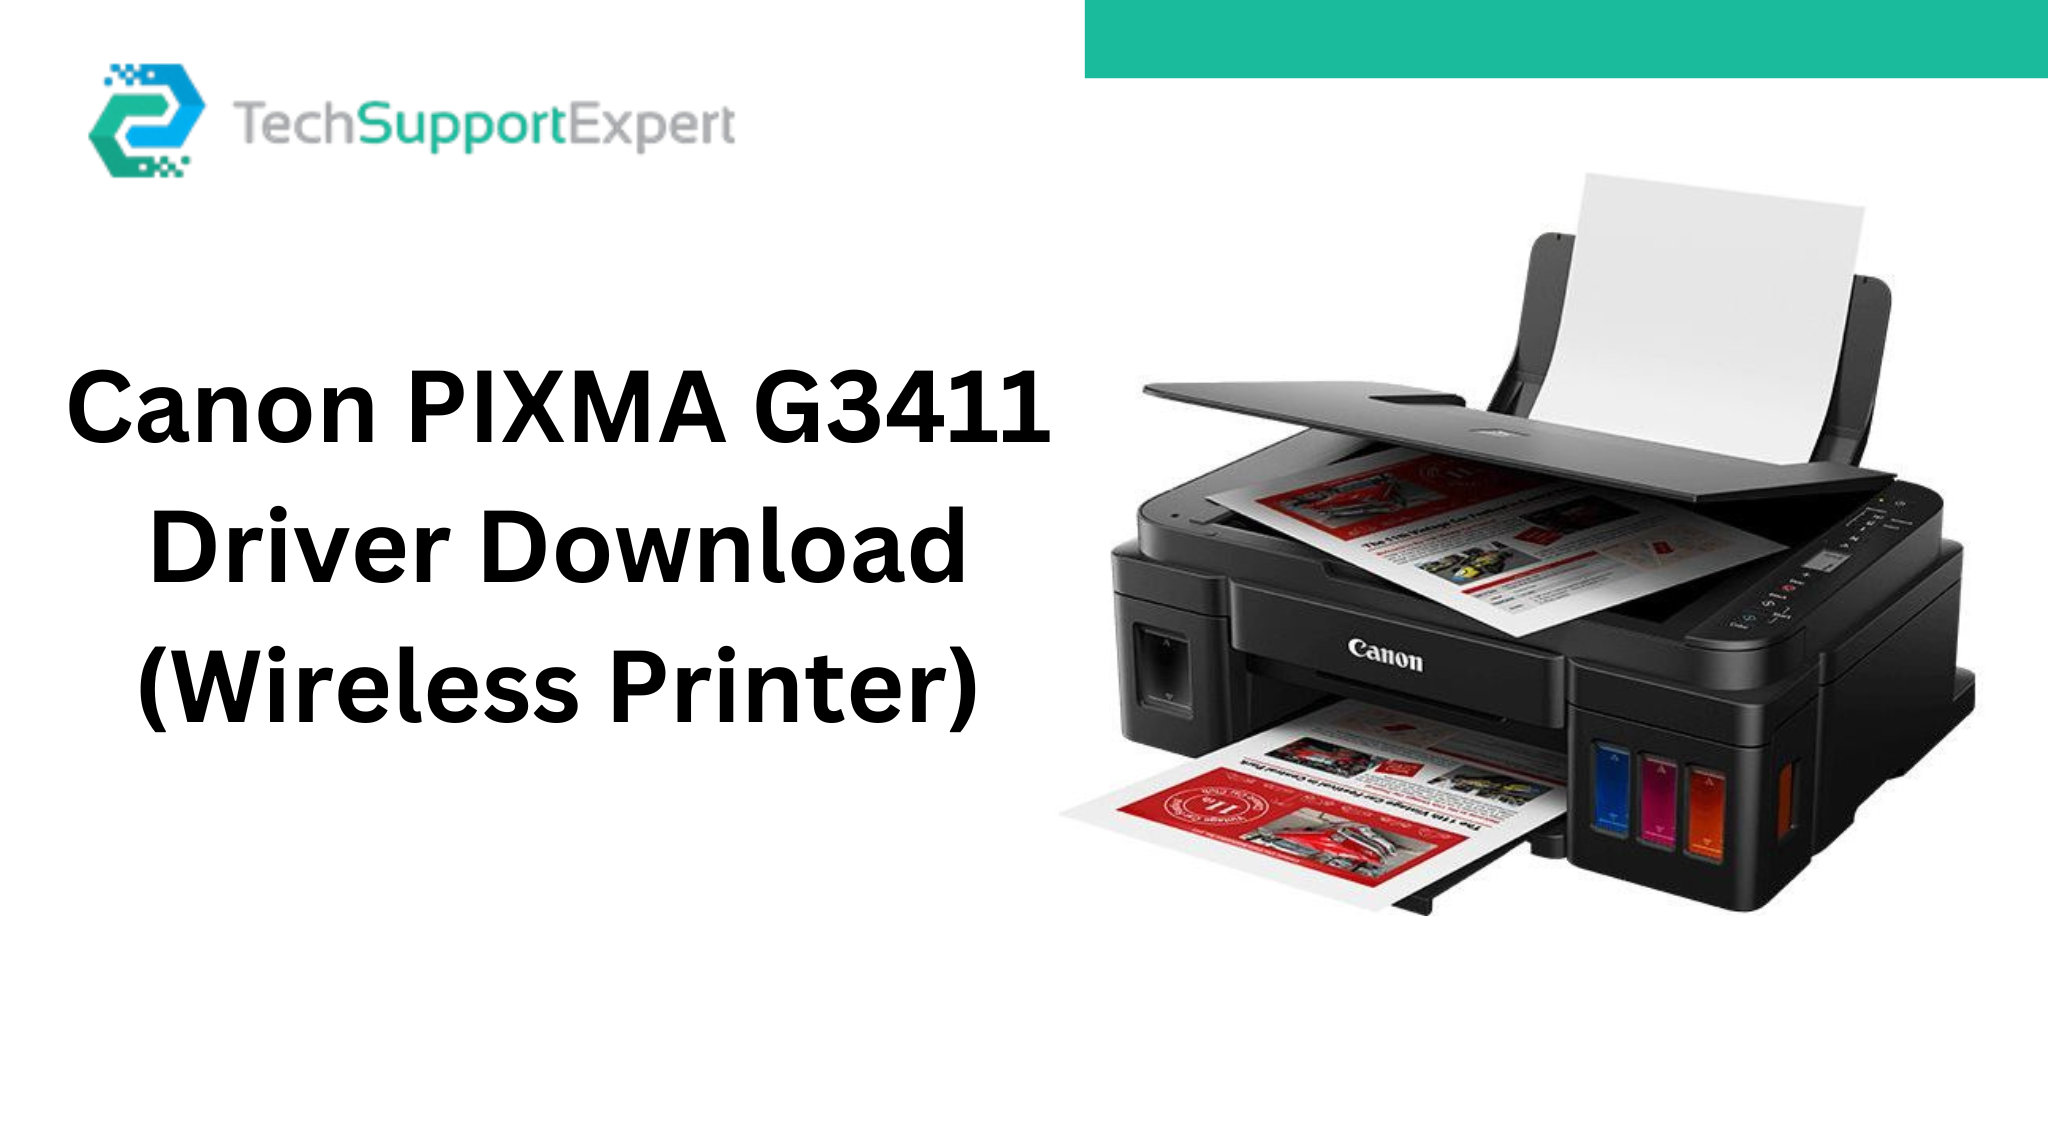 How to Download Canon PIXMA G3411 Driver (Wireless Printer)